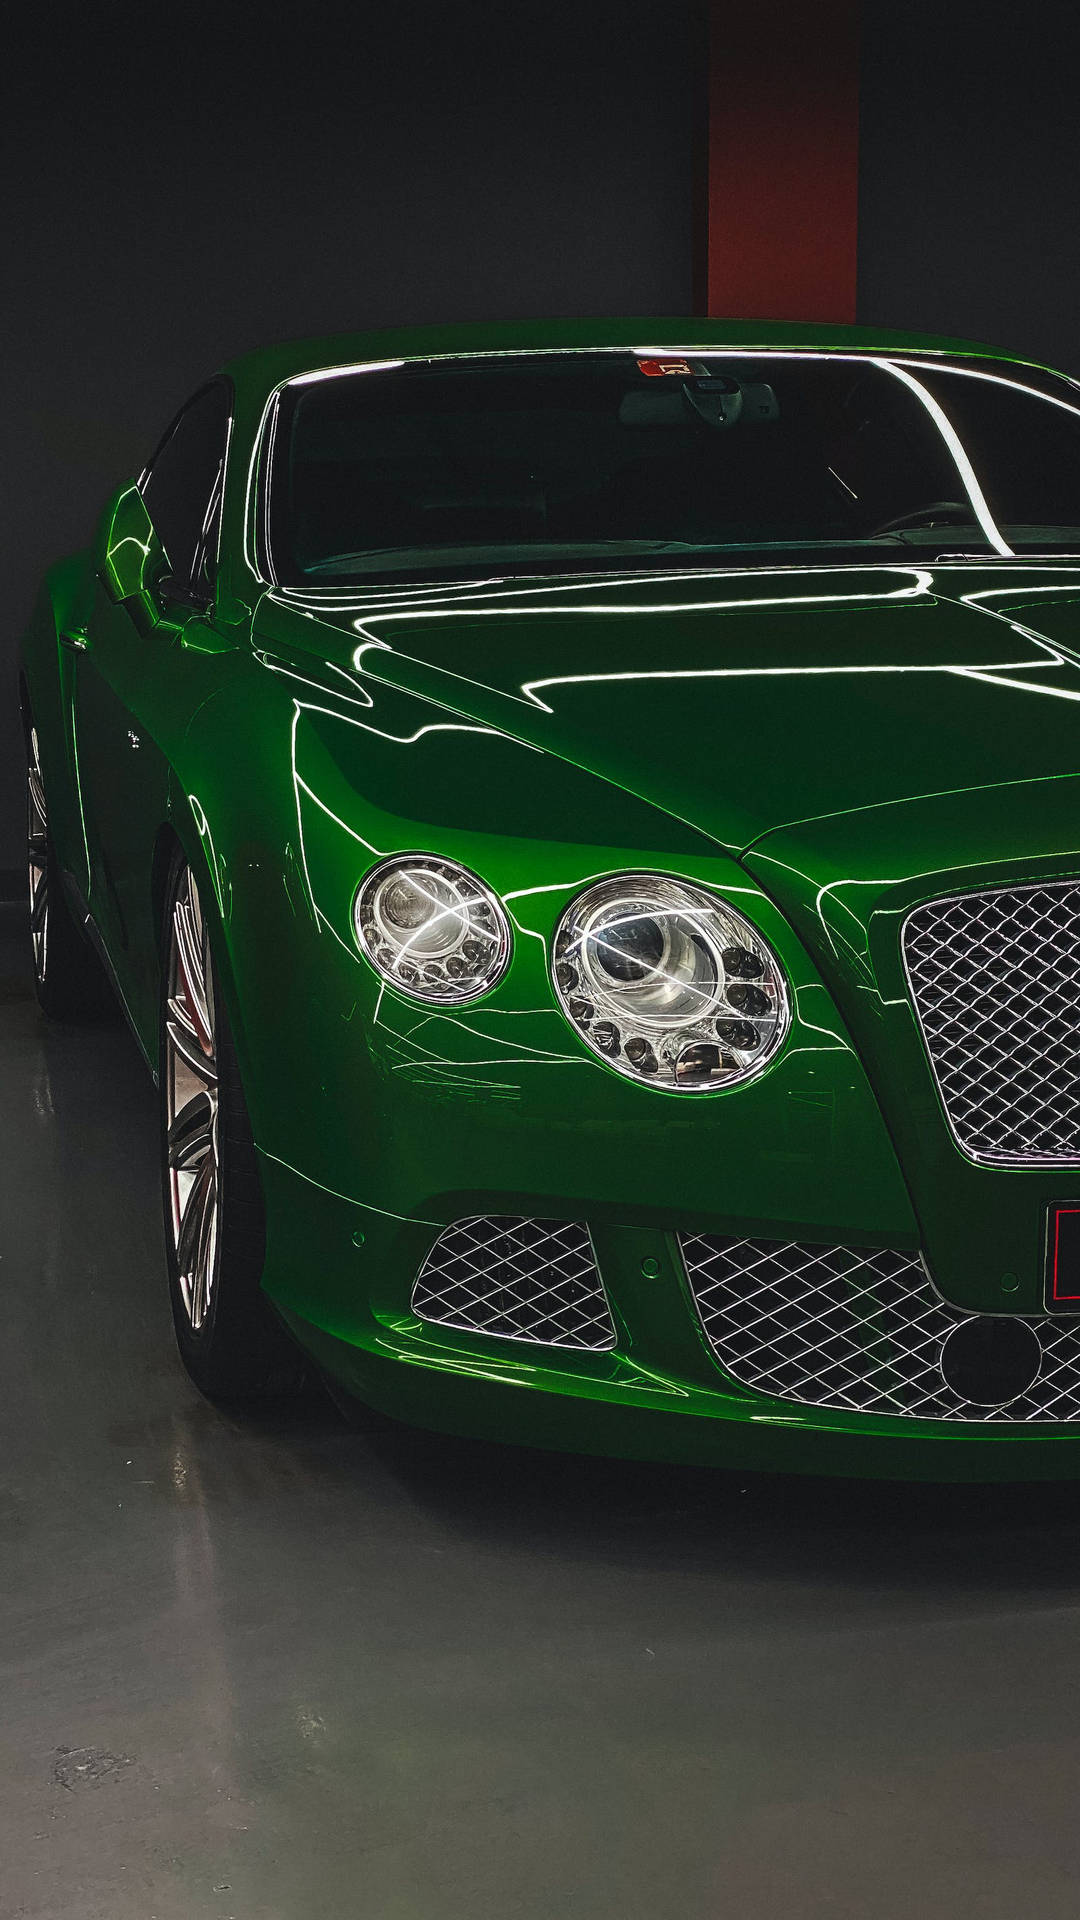 Grönsportbil Bentley Hd. Wallpaper